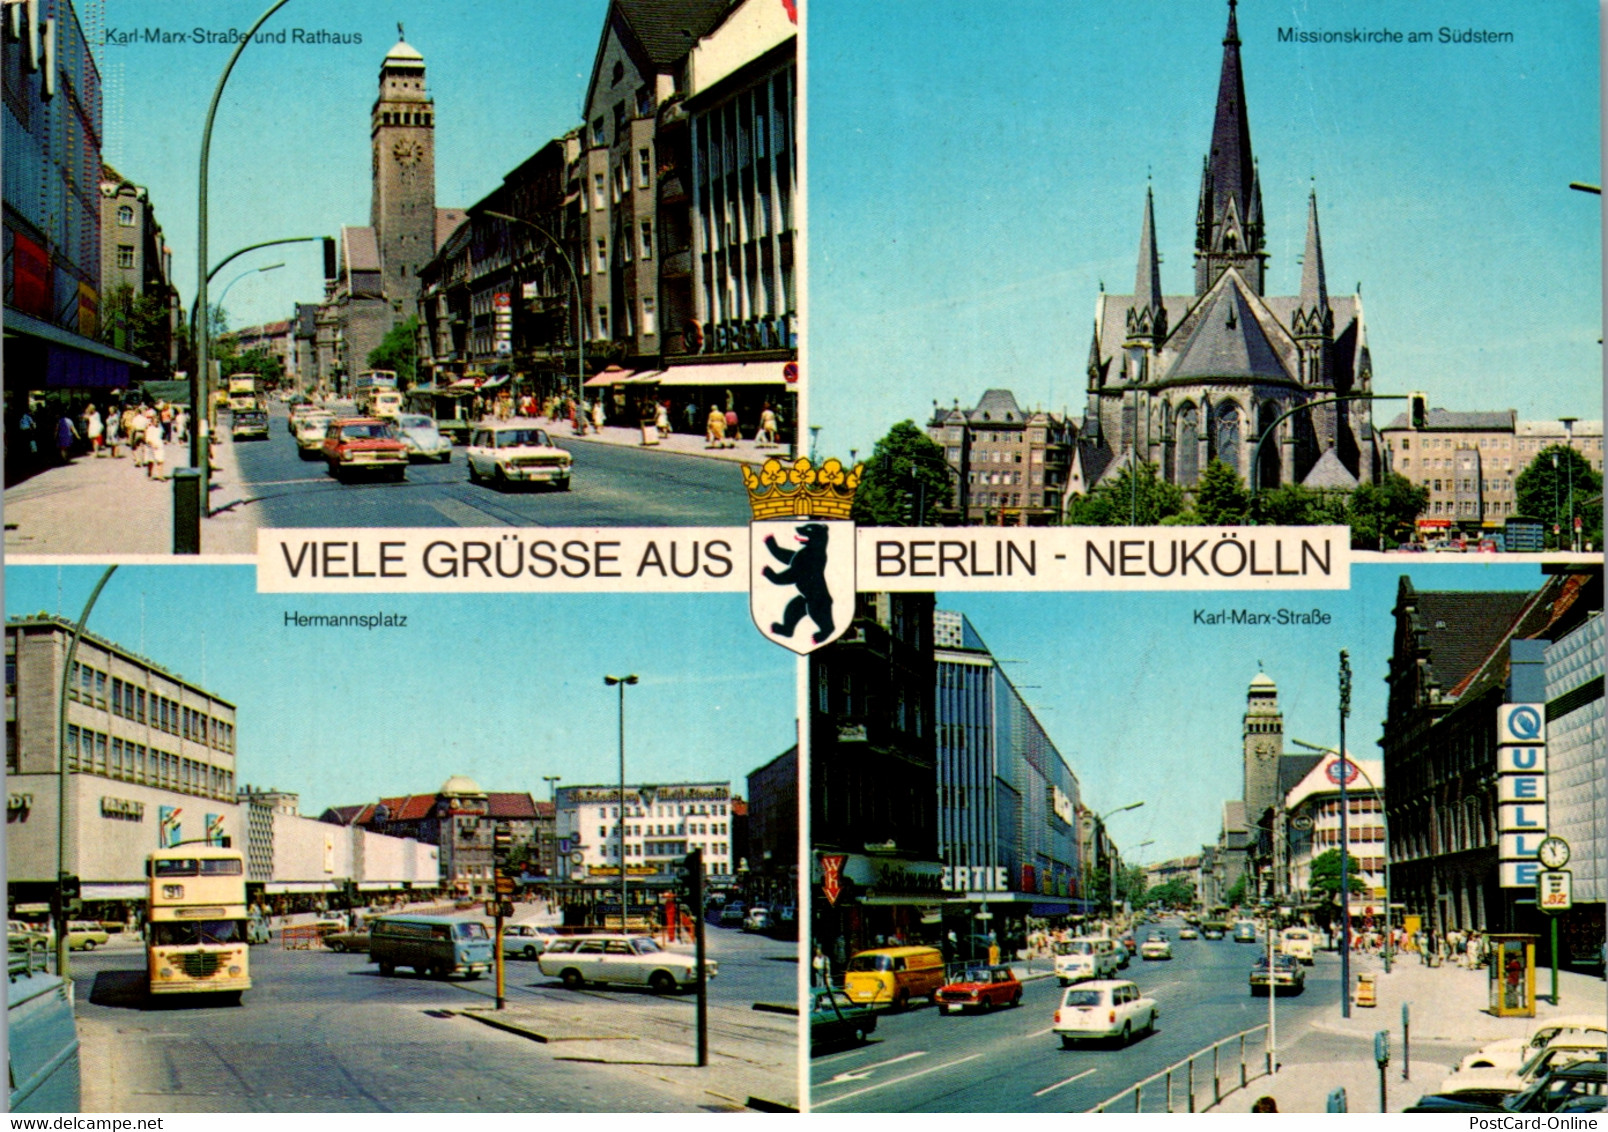 33737 - Deutschland - Berlin , Neukölln , Karl Marx Straße , Hermannsplatz , Missionskirche Am Südstern - Neukölln